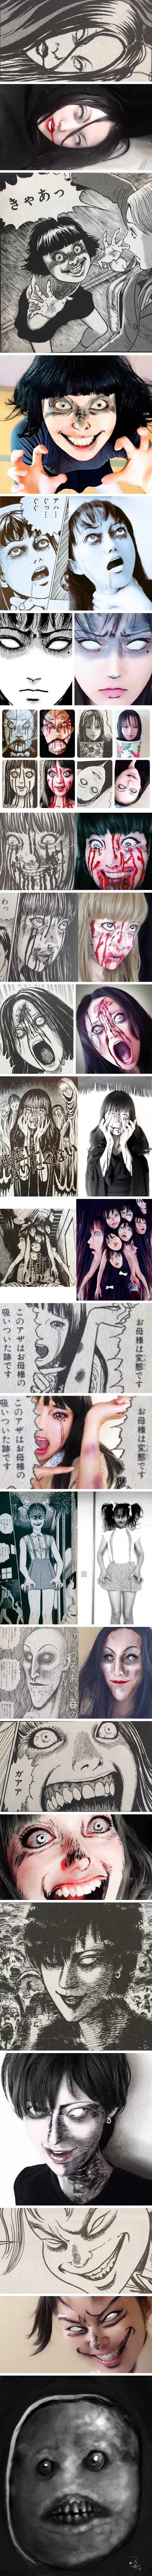 Recreating Scary Girls In Junji Ito's Manga With Facepaint